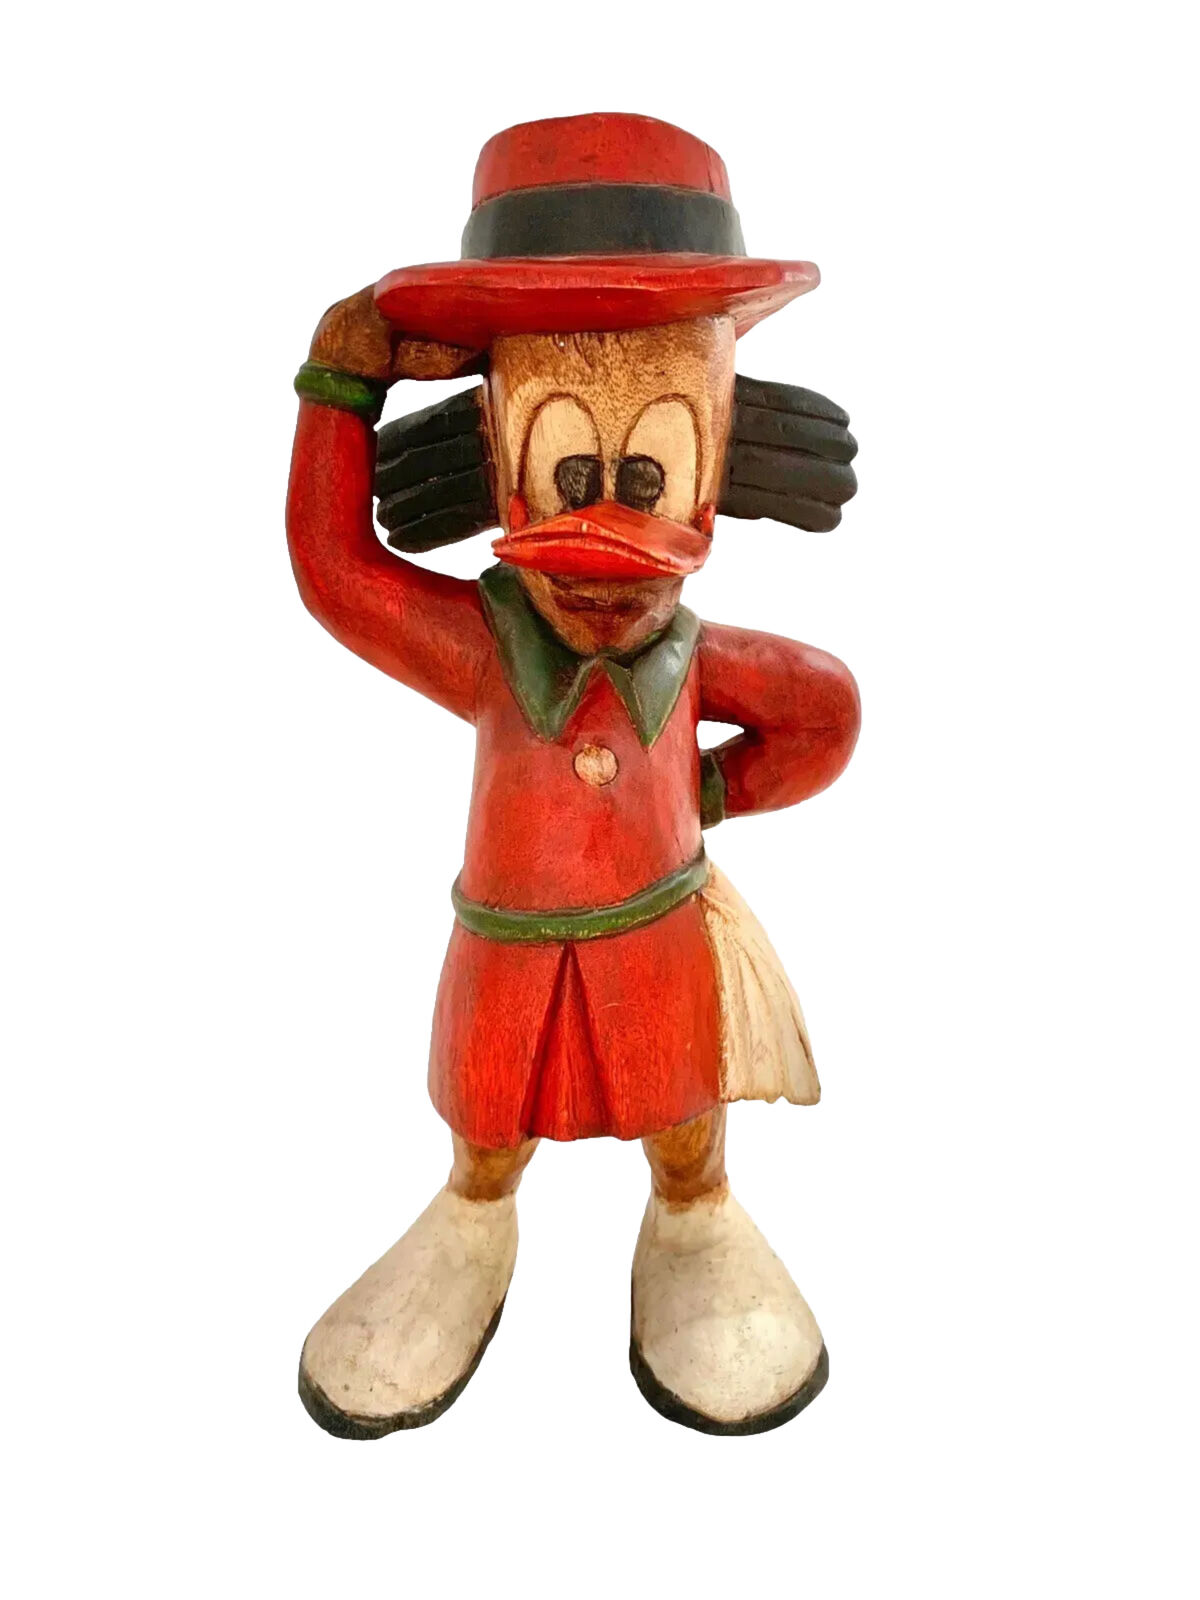 Vintage Disney Figurine Large Mr Scrooge Wood Statue Collectible Decor